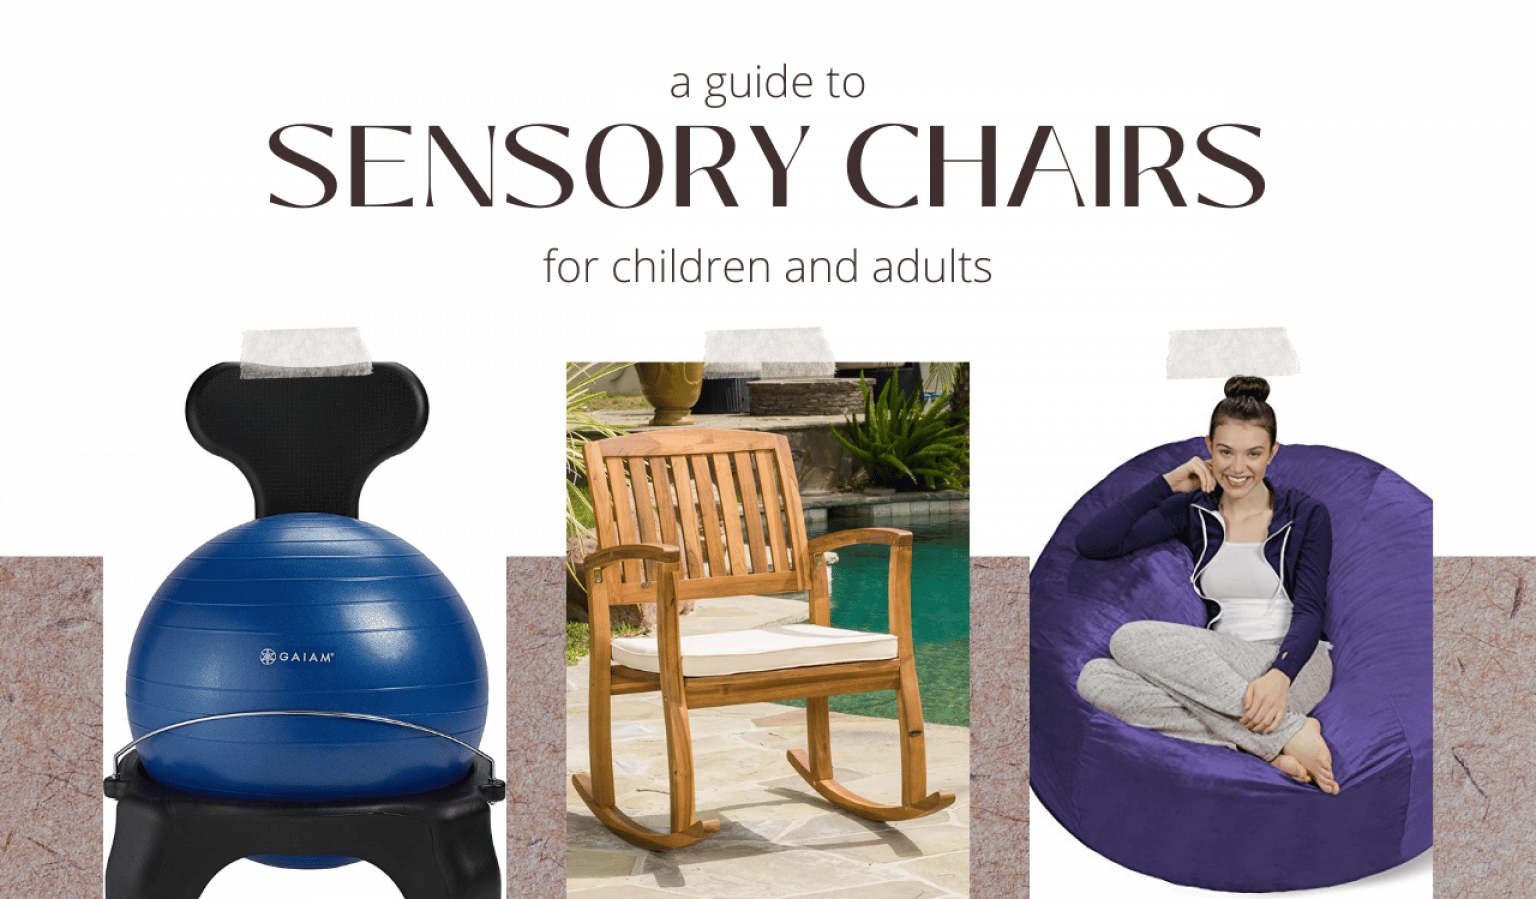 Sensory Chairs Guide 1536x899 